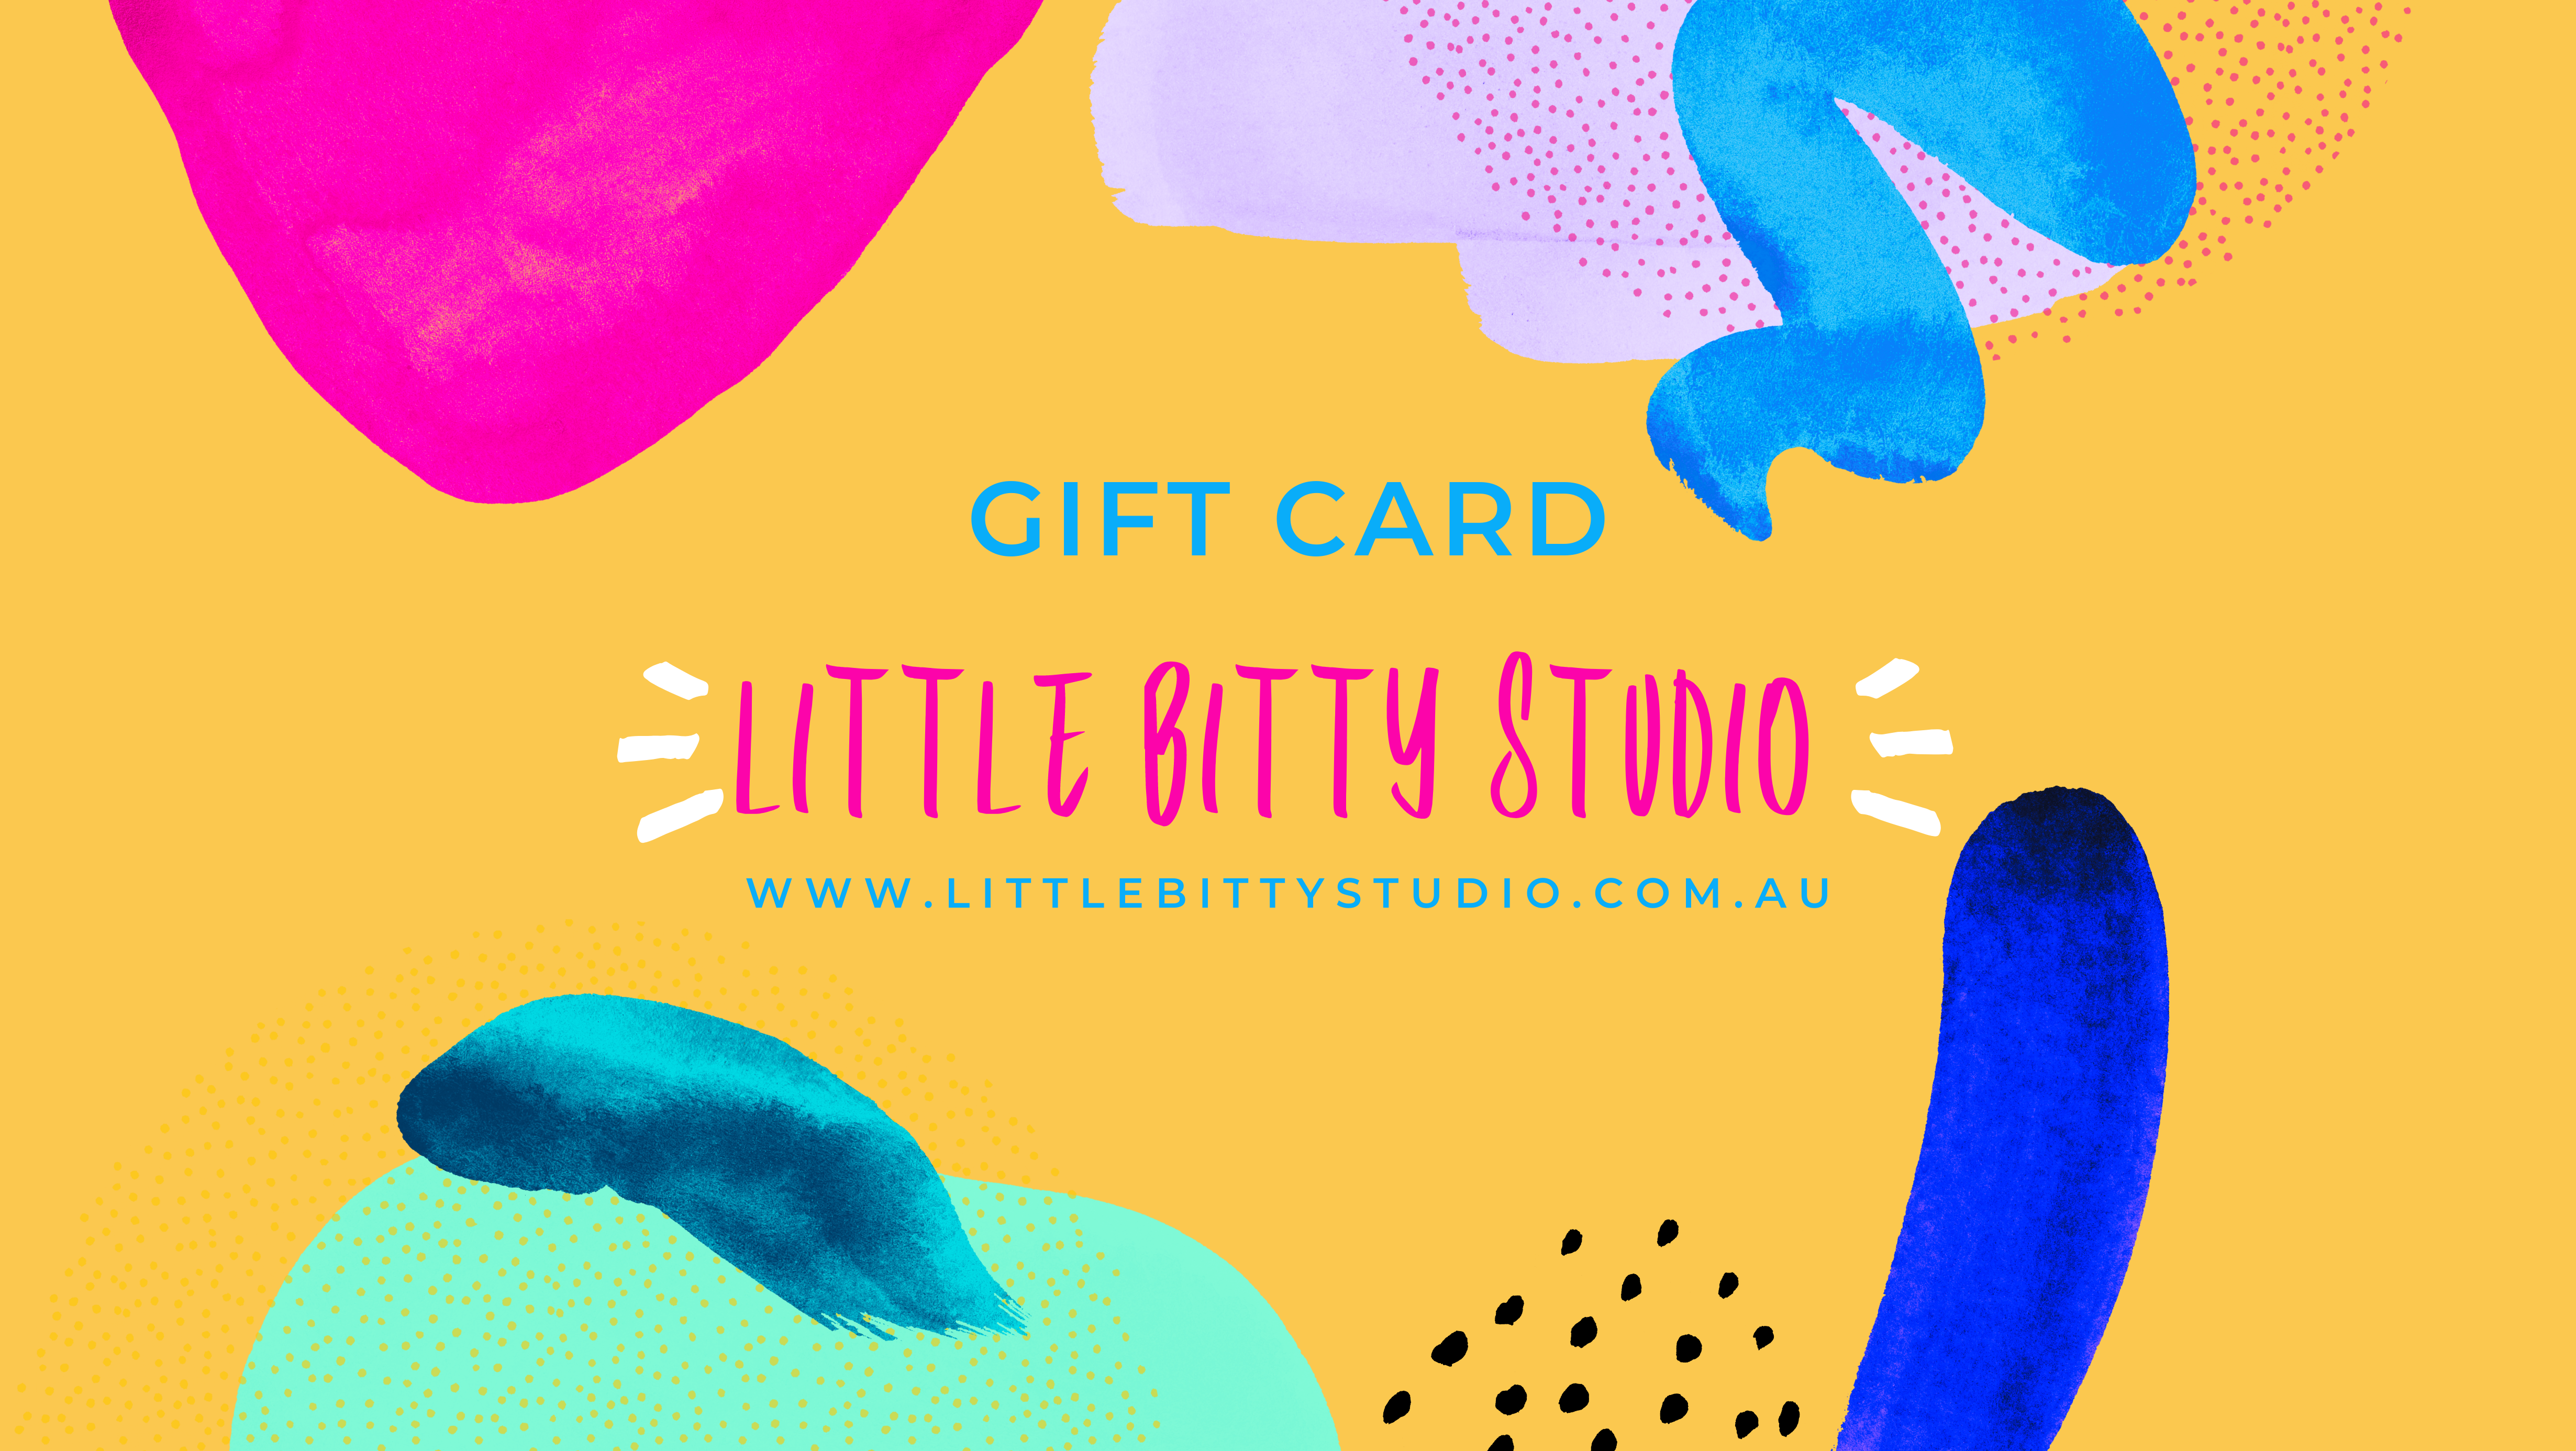 LITTLE BITTY STUDIO  |  GIFT CARD